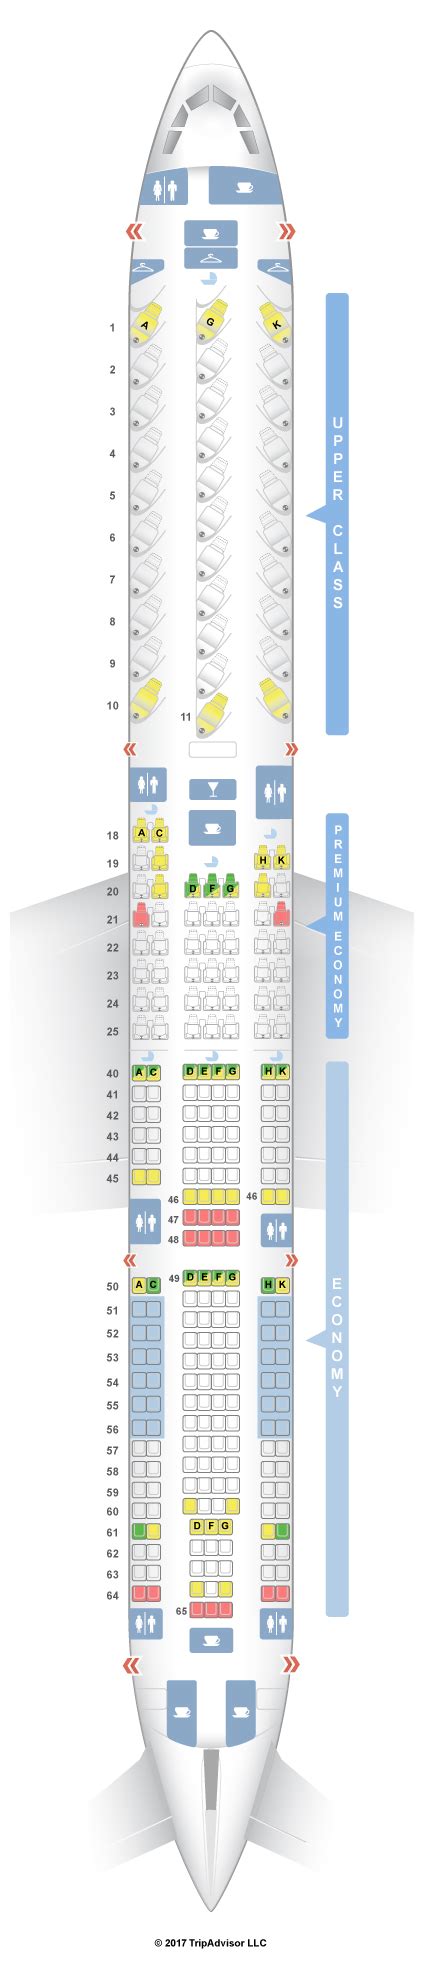 Seatguru Seat Map Virgin Atlantic Airbus A330 300 333 Layout 2